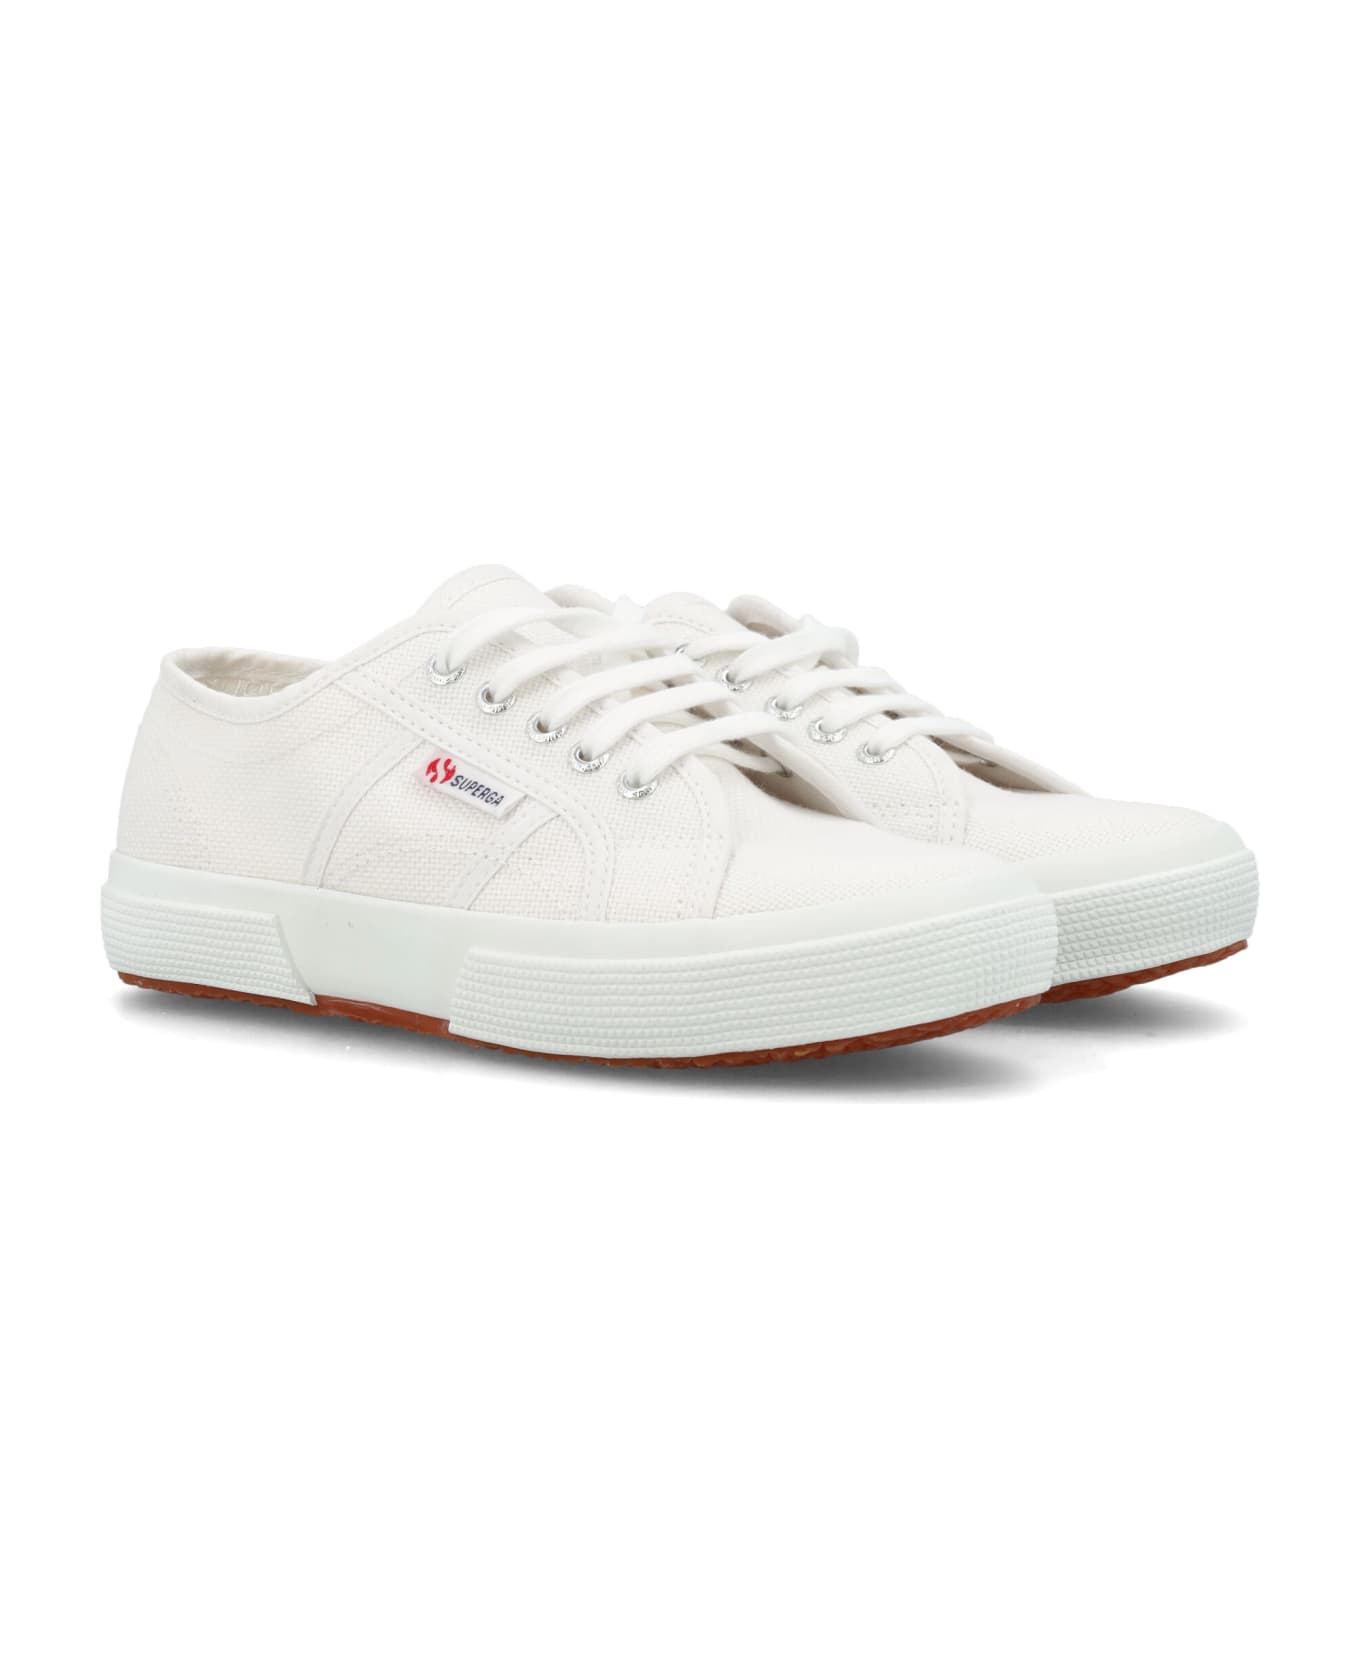 Superga 2750-jcot Classic Sneakers - WHITE